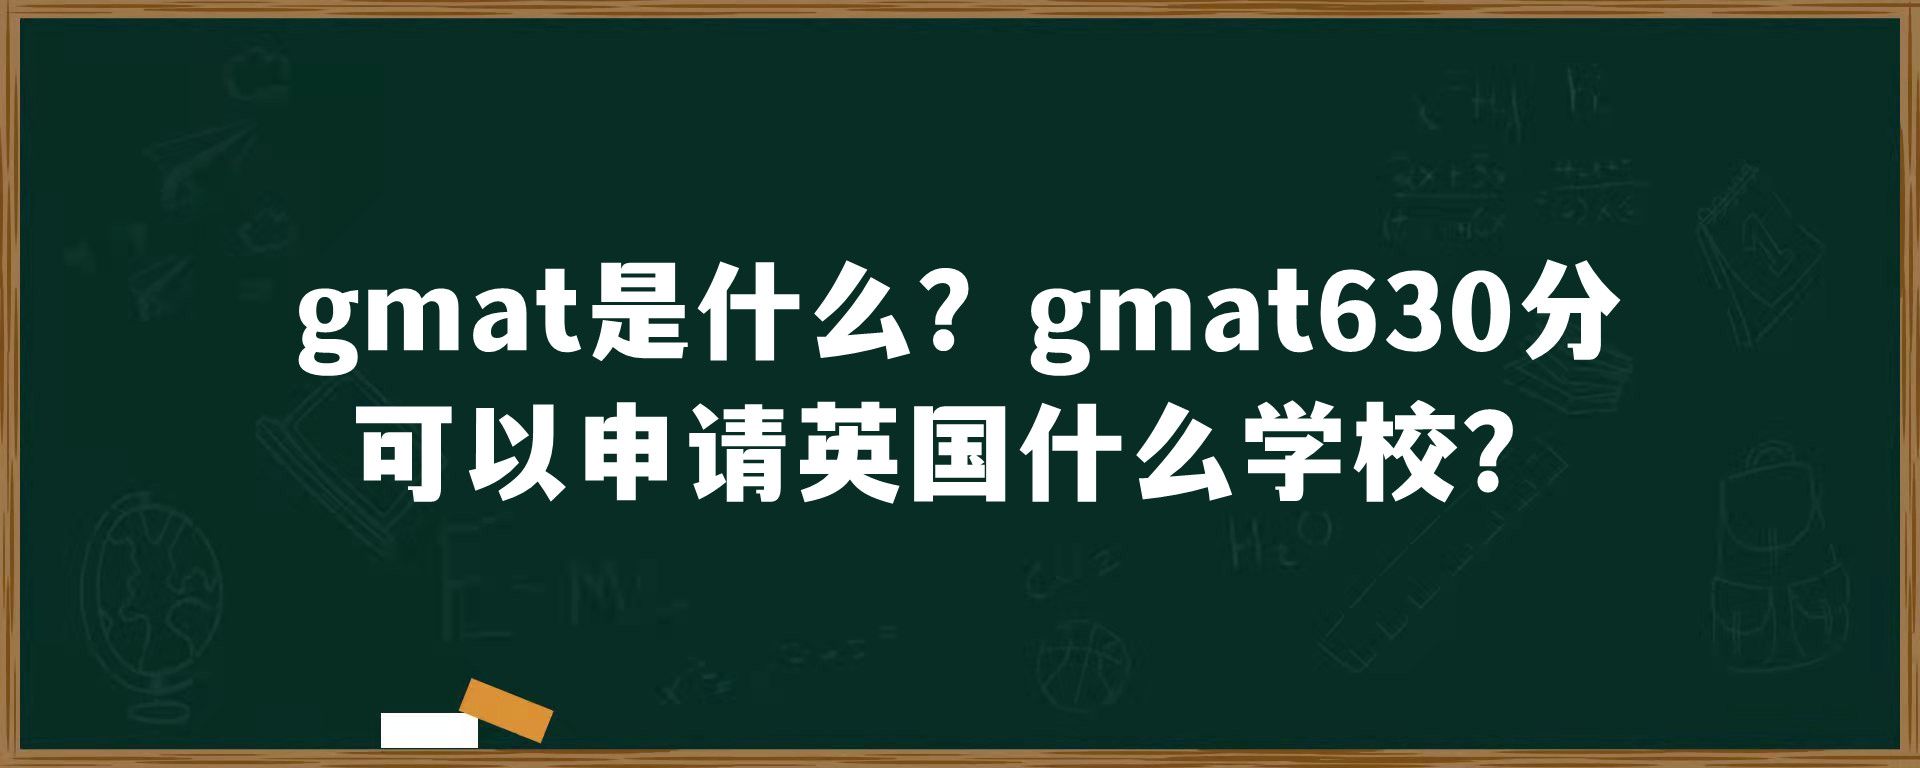 gmat是什么？gmat630分可以申请英国什么学校？